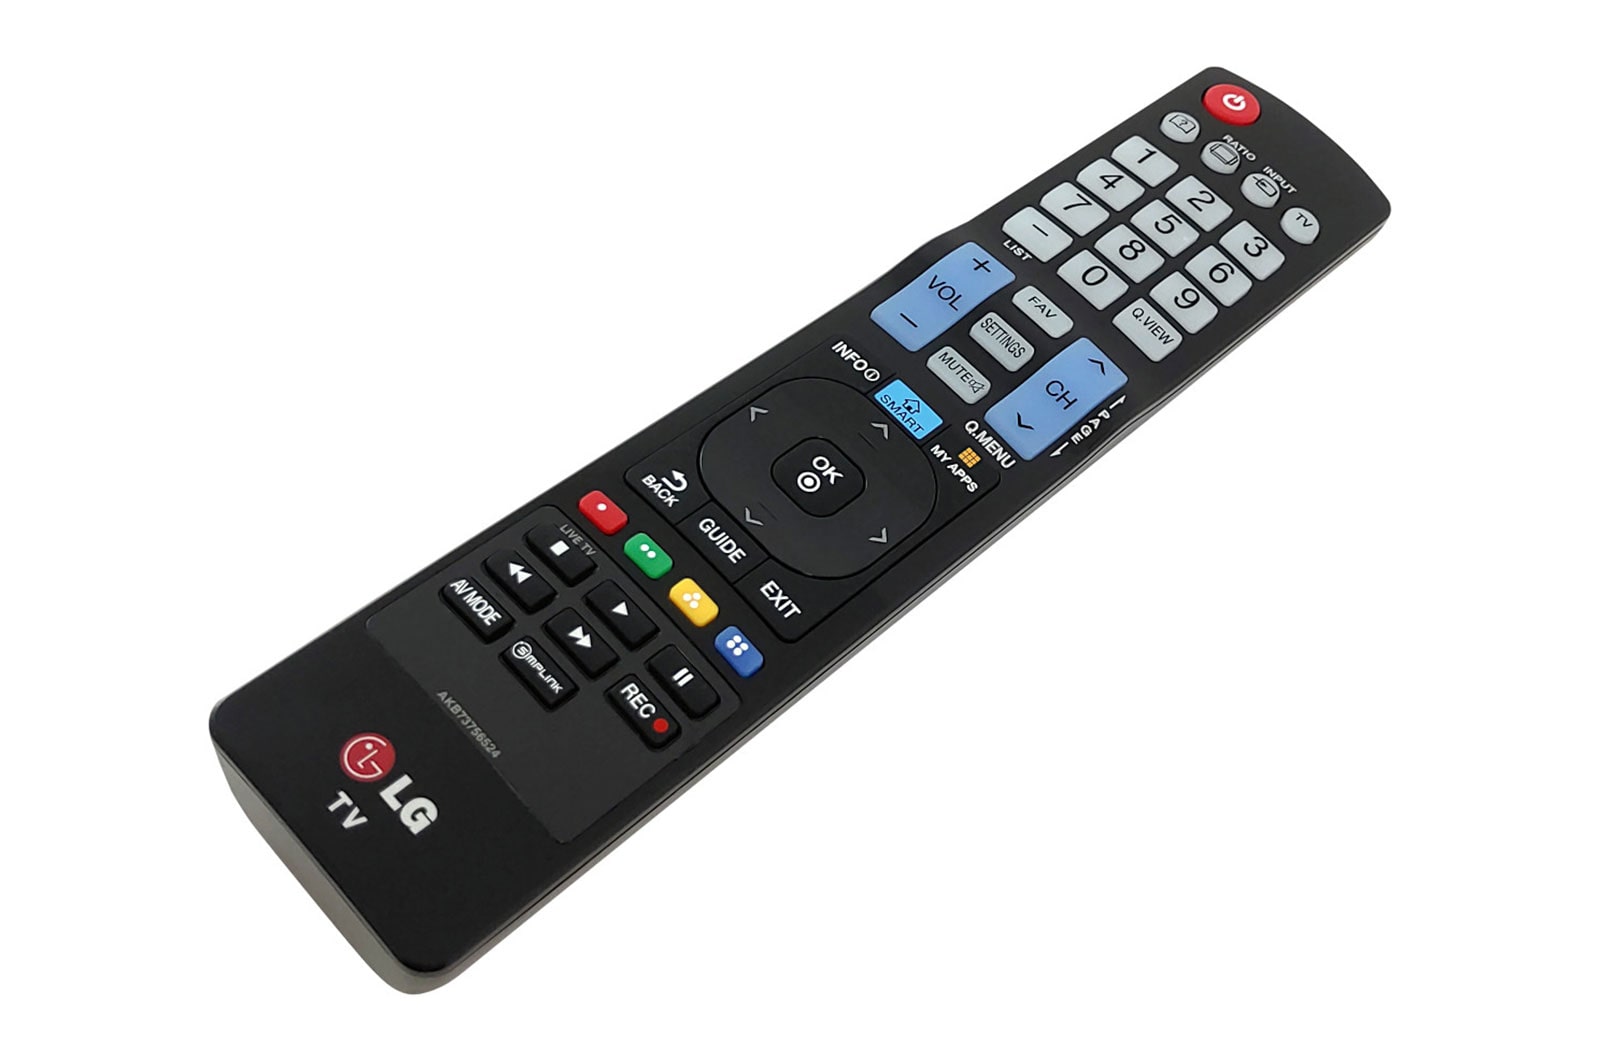 LG Controle Remoto LG TV Smart AKB73756524, AKB73756524